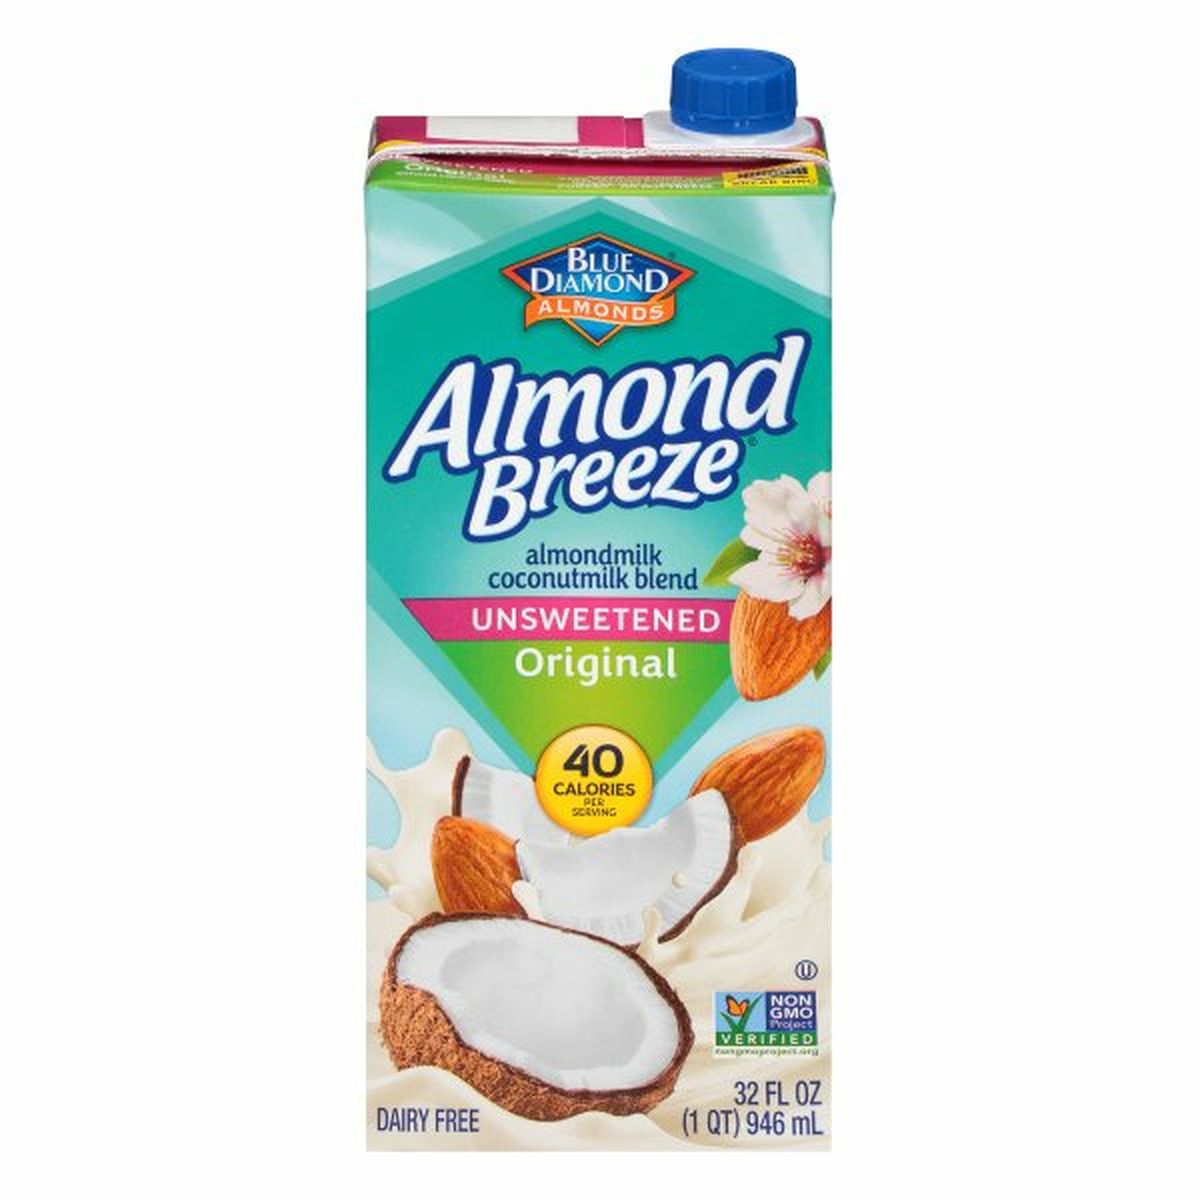 Calories in Almond Breeze Almond Beverage, Original, Unsweetened